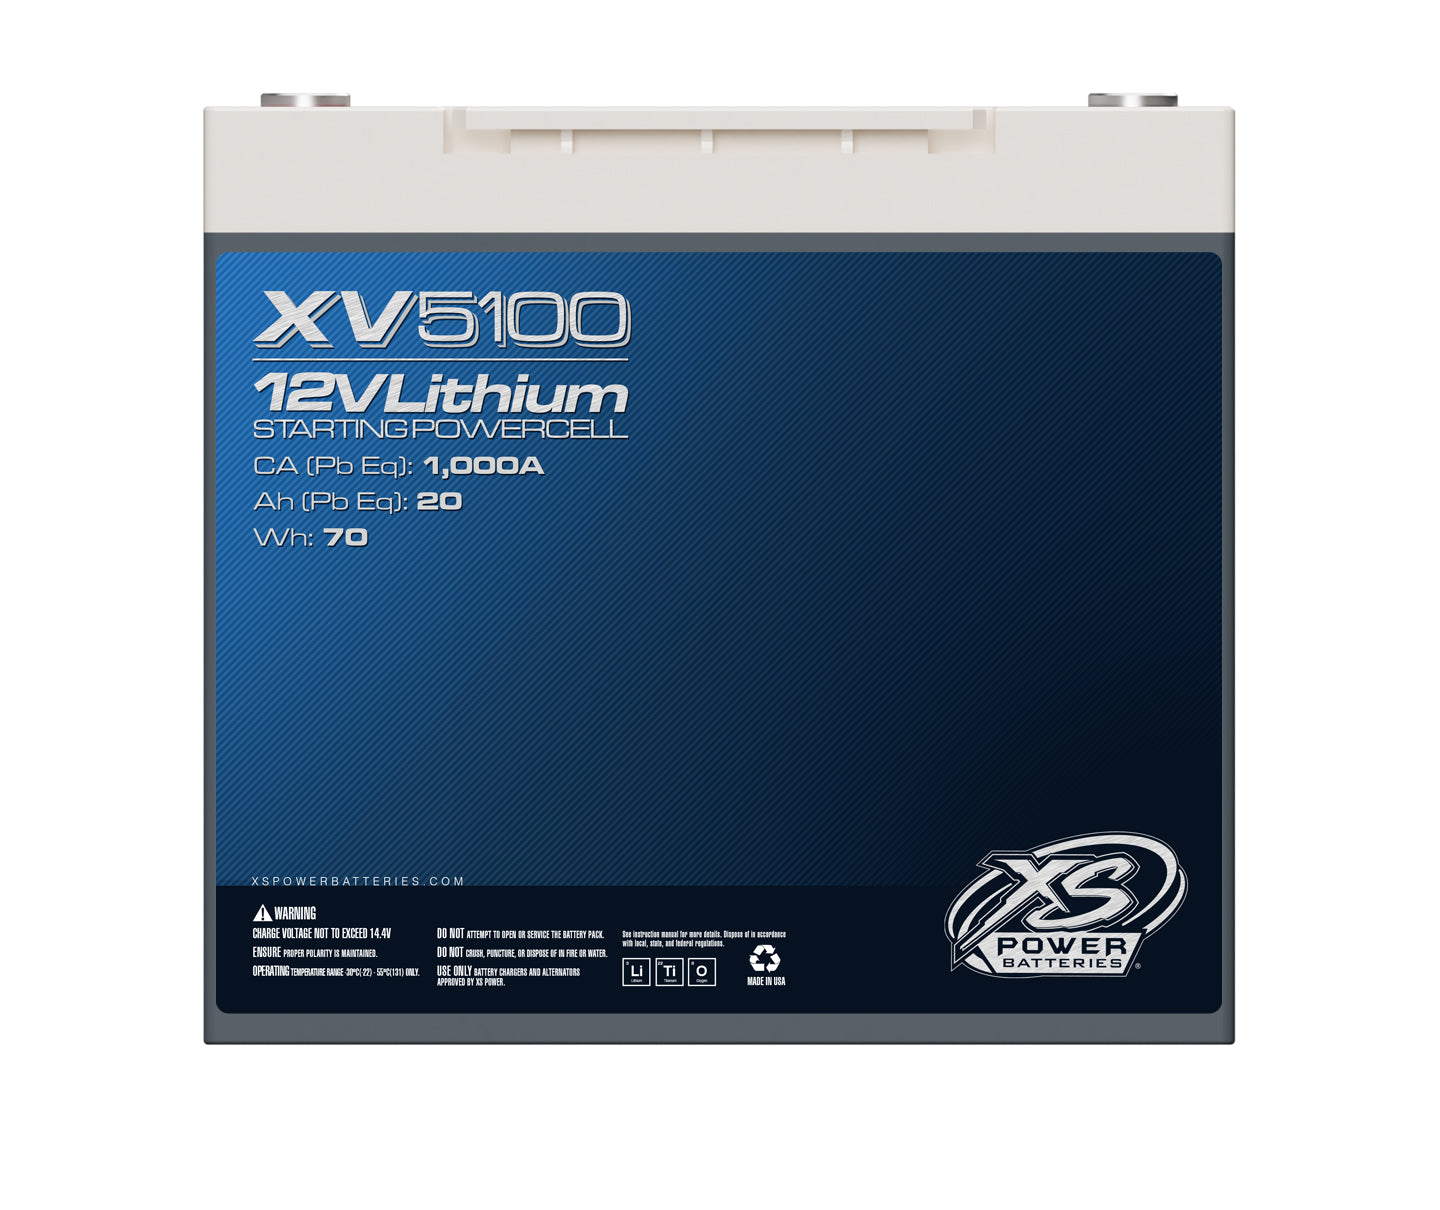 XV5100 XS Power 12VDC Group 51 Lithium LTO Underhood-Safe Battery 1500W 70Wh